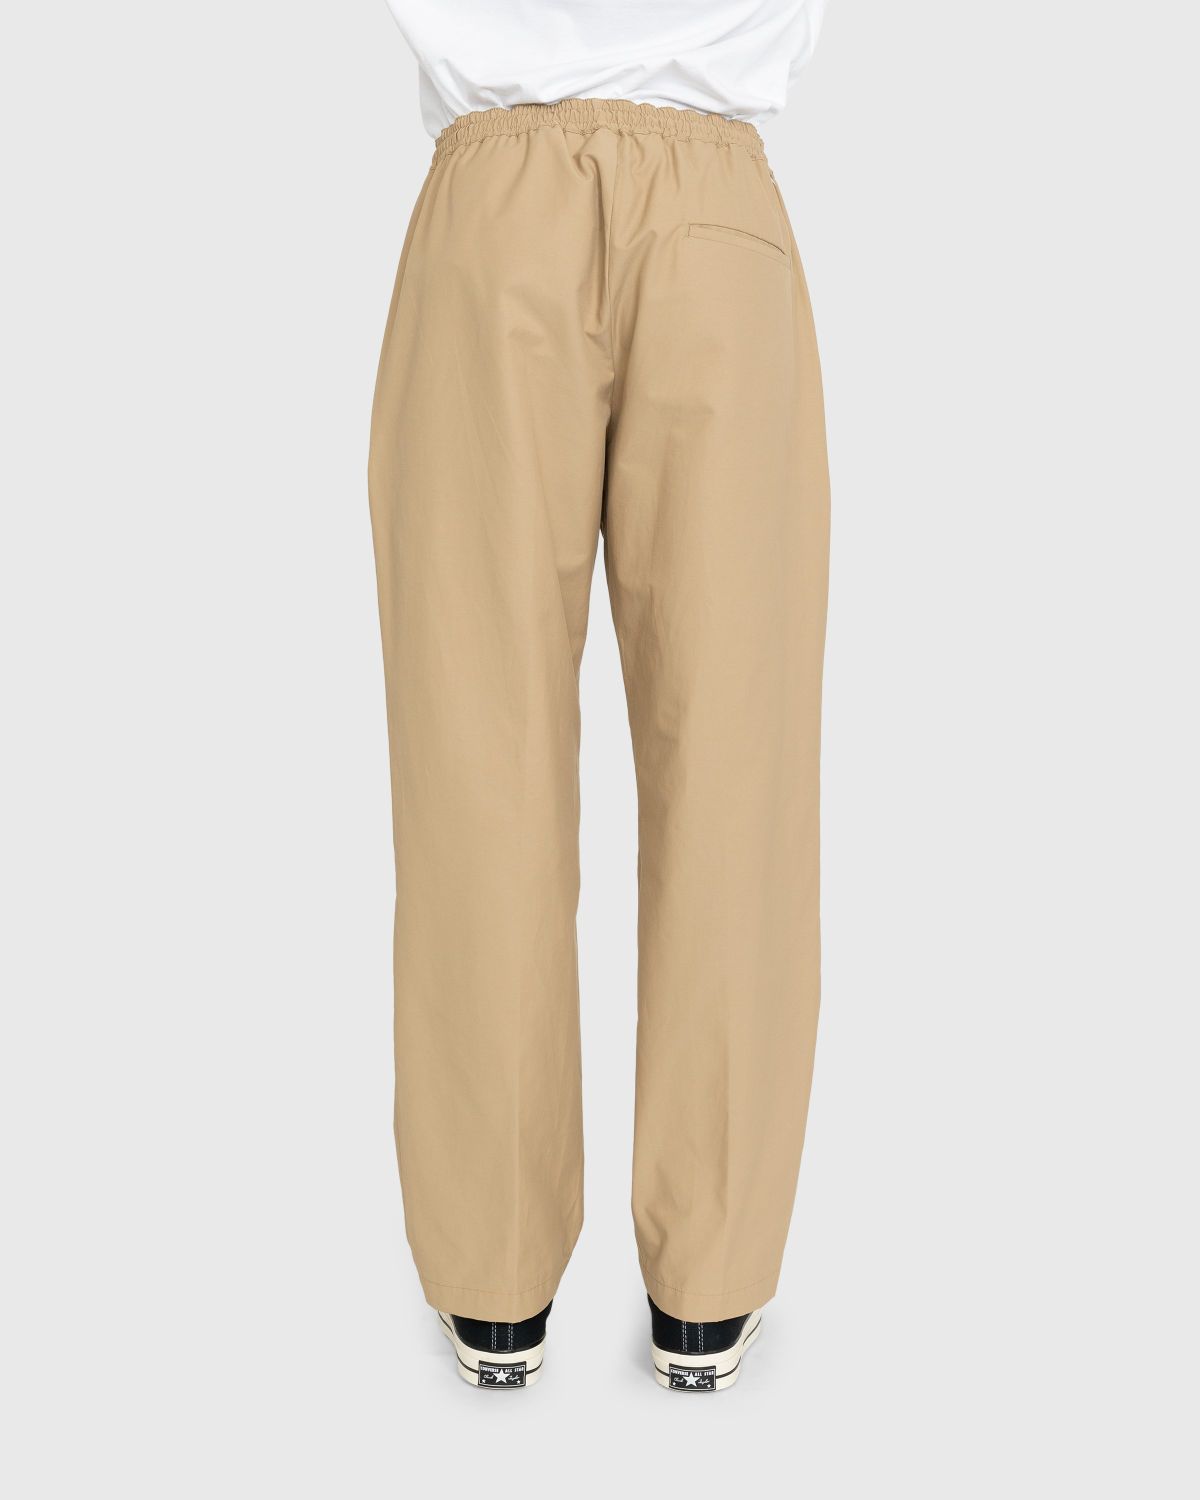 Highsnobiety – Cotton Nylon Elastic Pants Beige - Trousers - Beige - Image 4